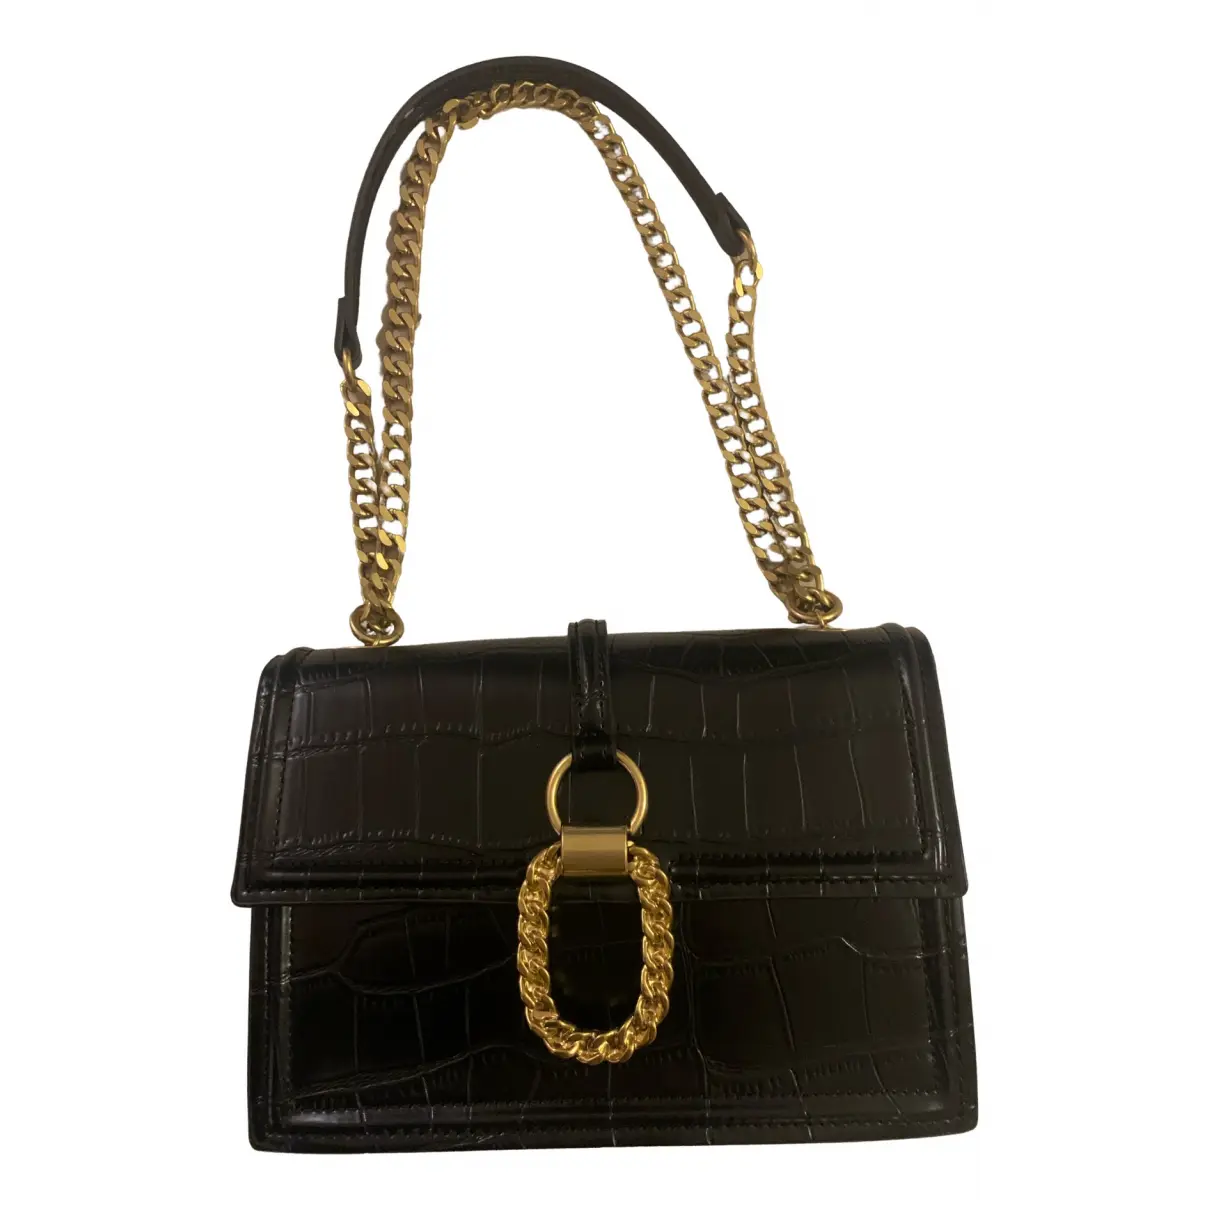 Patent leather handbag Zara